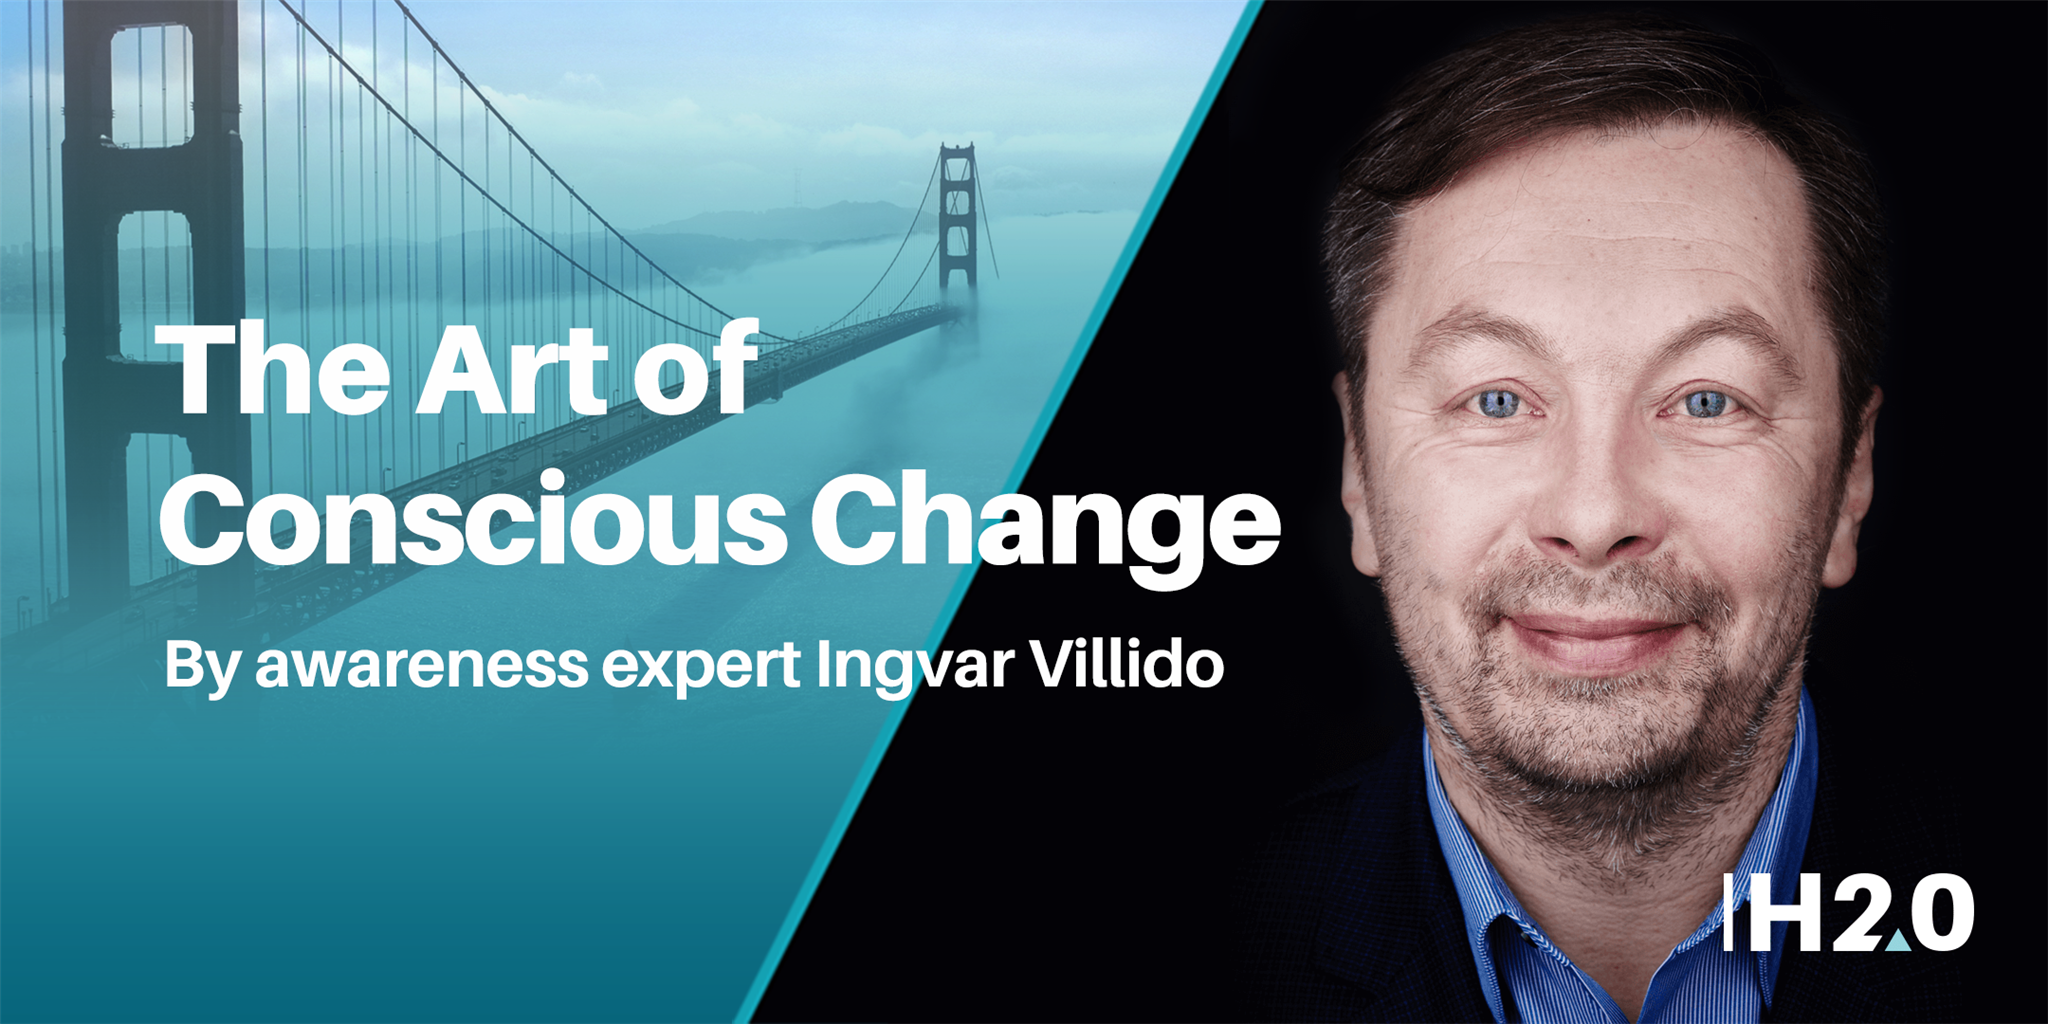 The Art of Conscious Change with Awareness Master Ingvar Villido